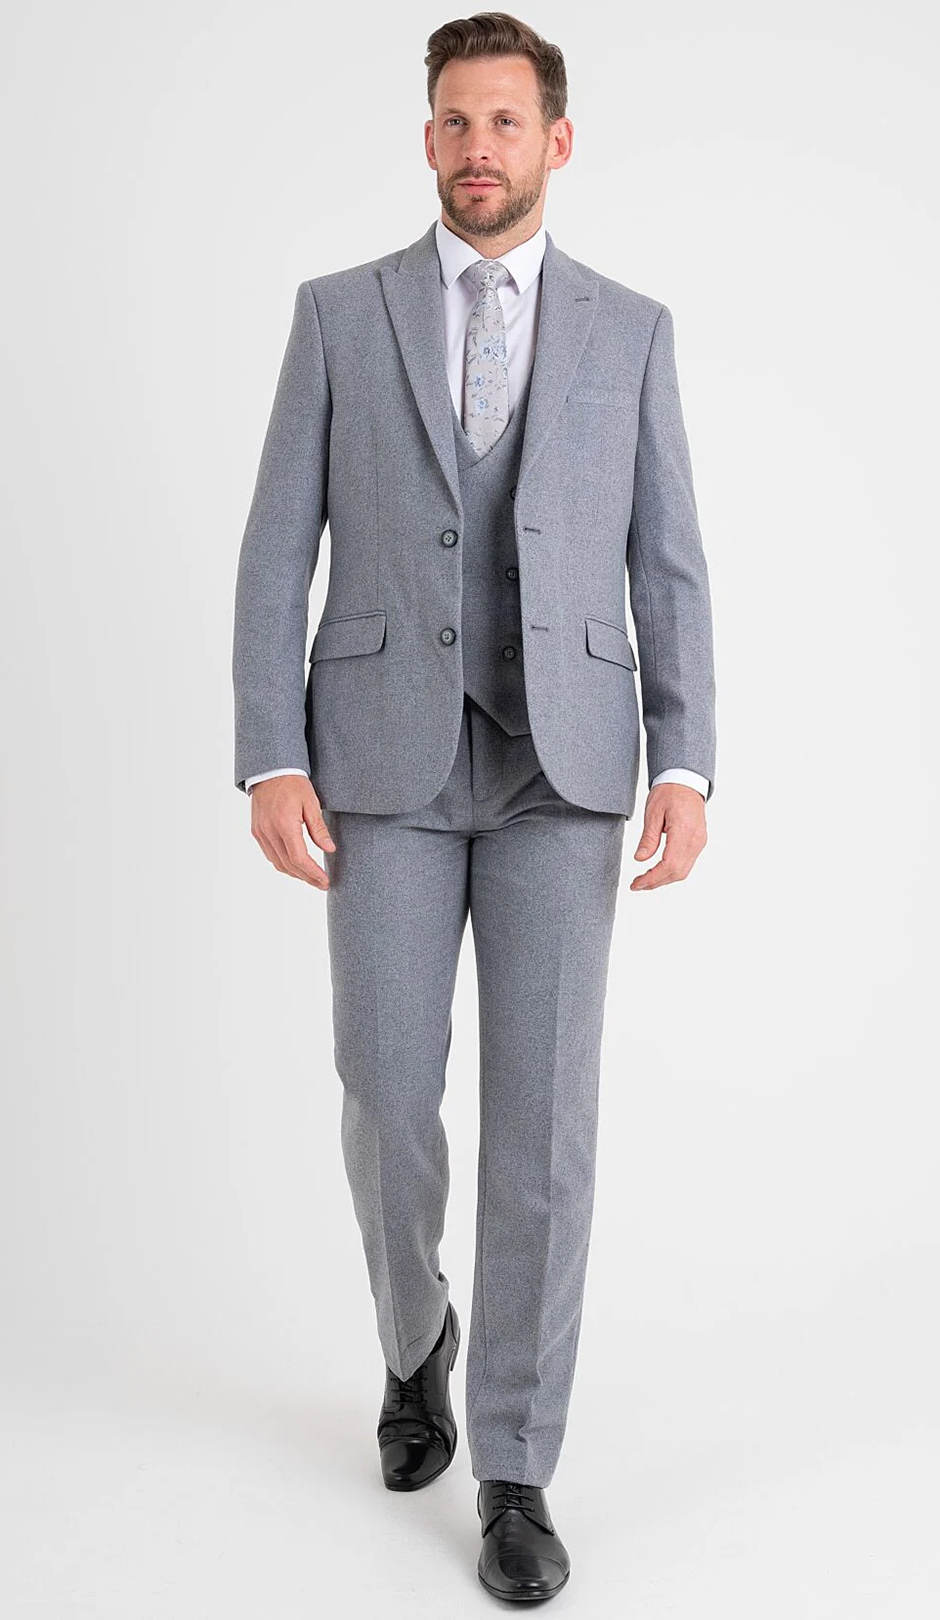 Tweed groom suit in grey from Moss Bros 